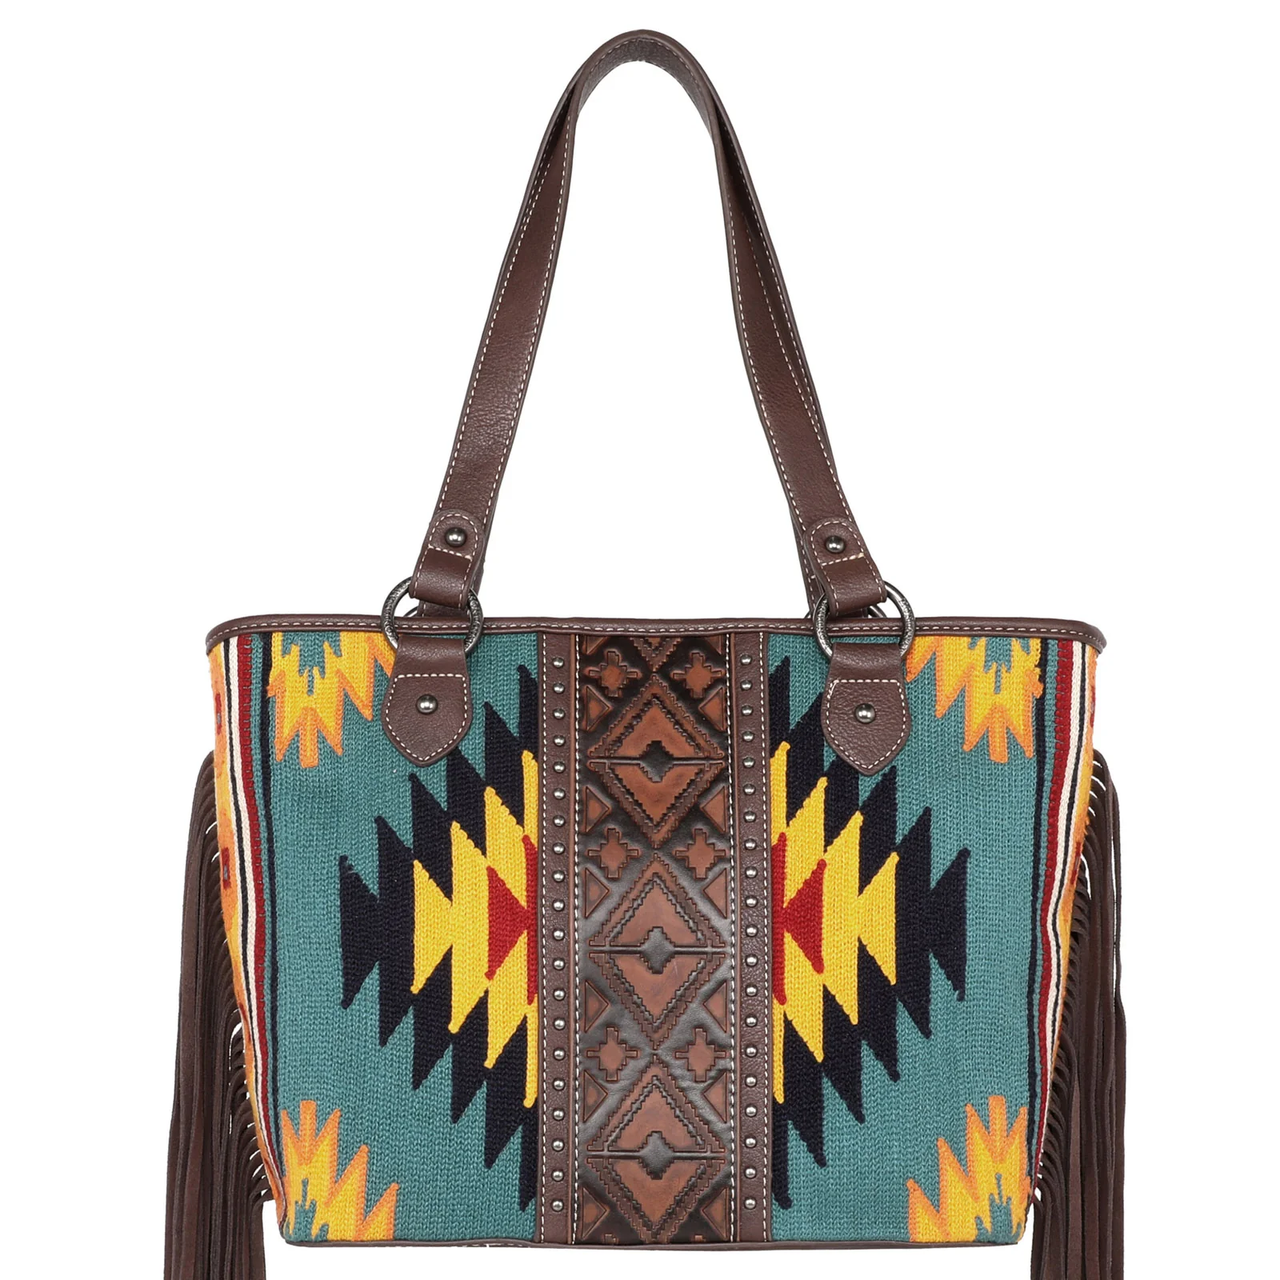 Aztec Tribal Print Tote Bag Handbag Large Beach Travel Tassel Fully Lined |  eBay